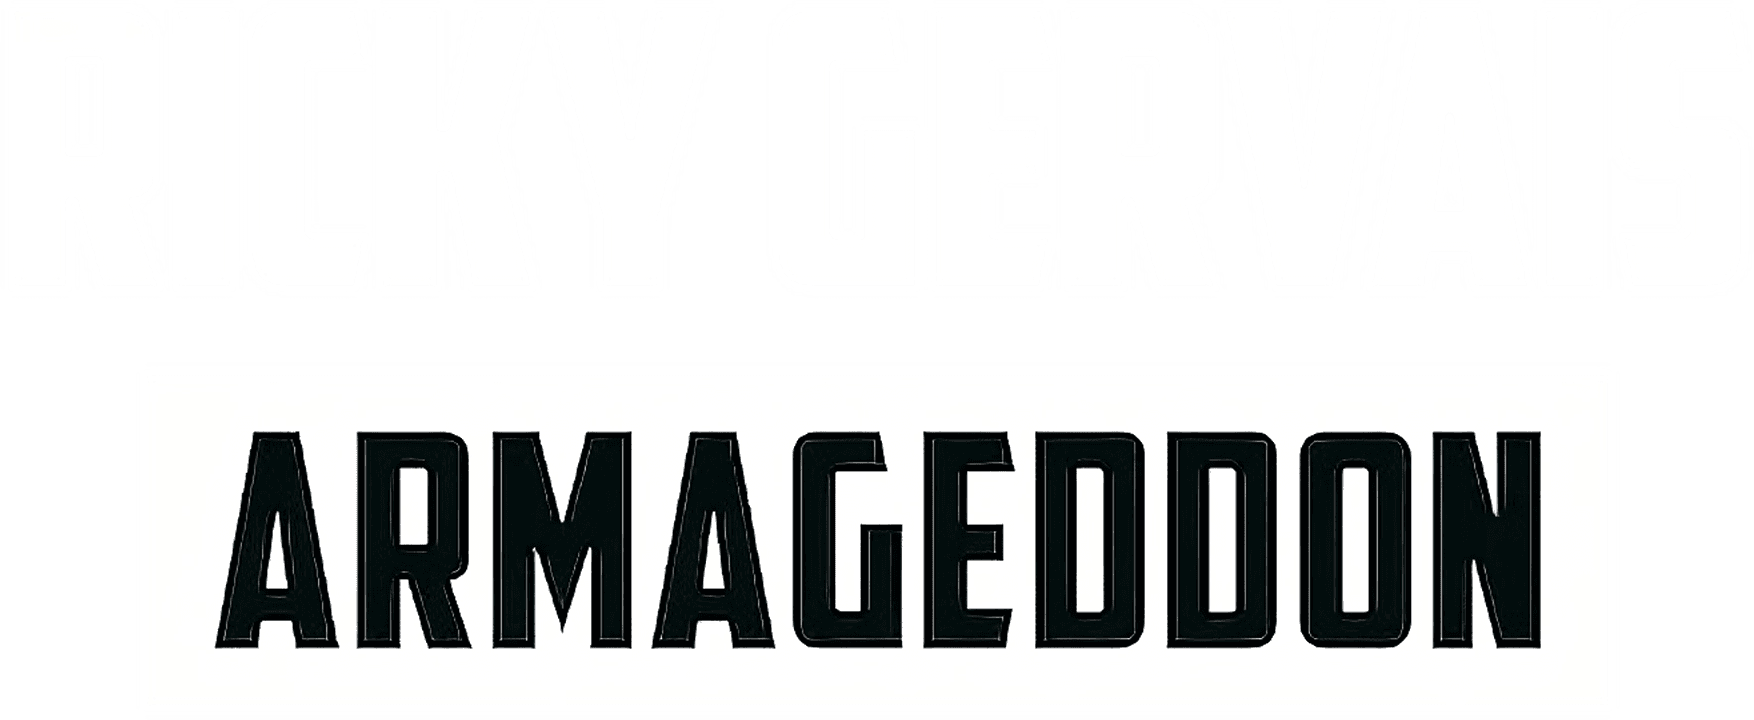 Ricky Gervais: Armageddon logo